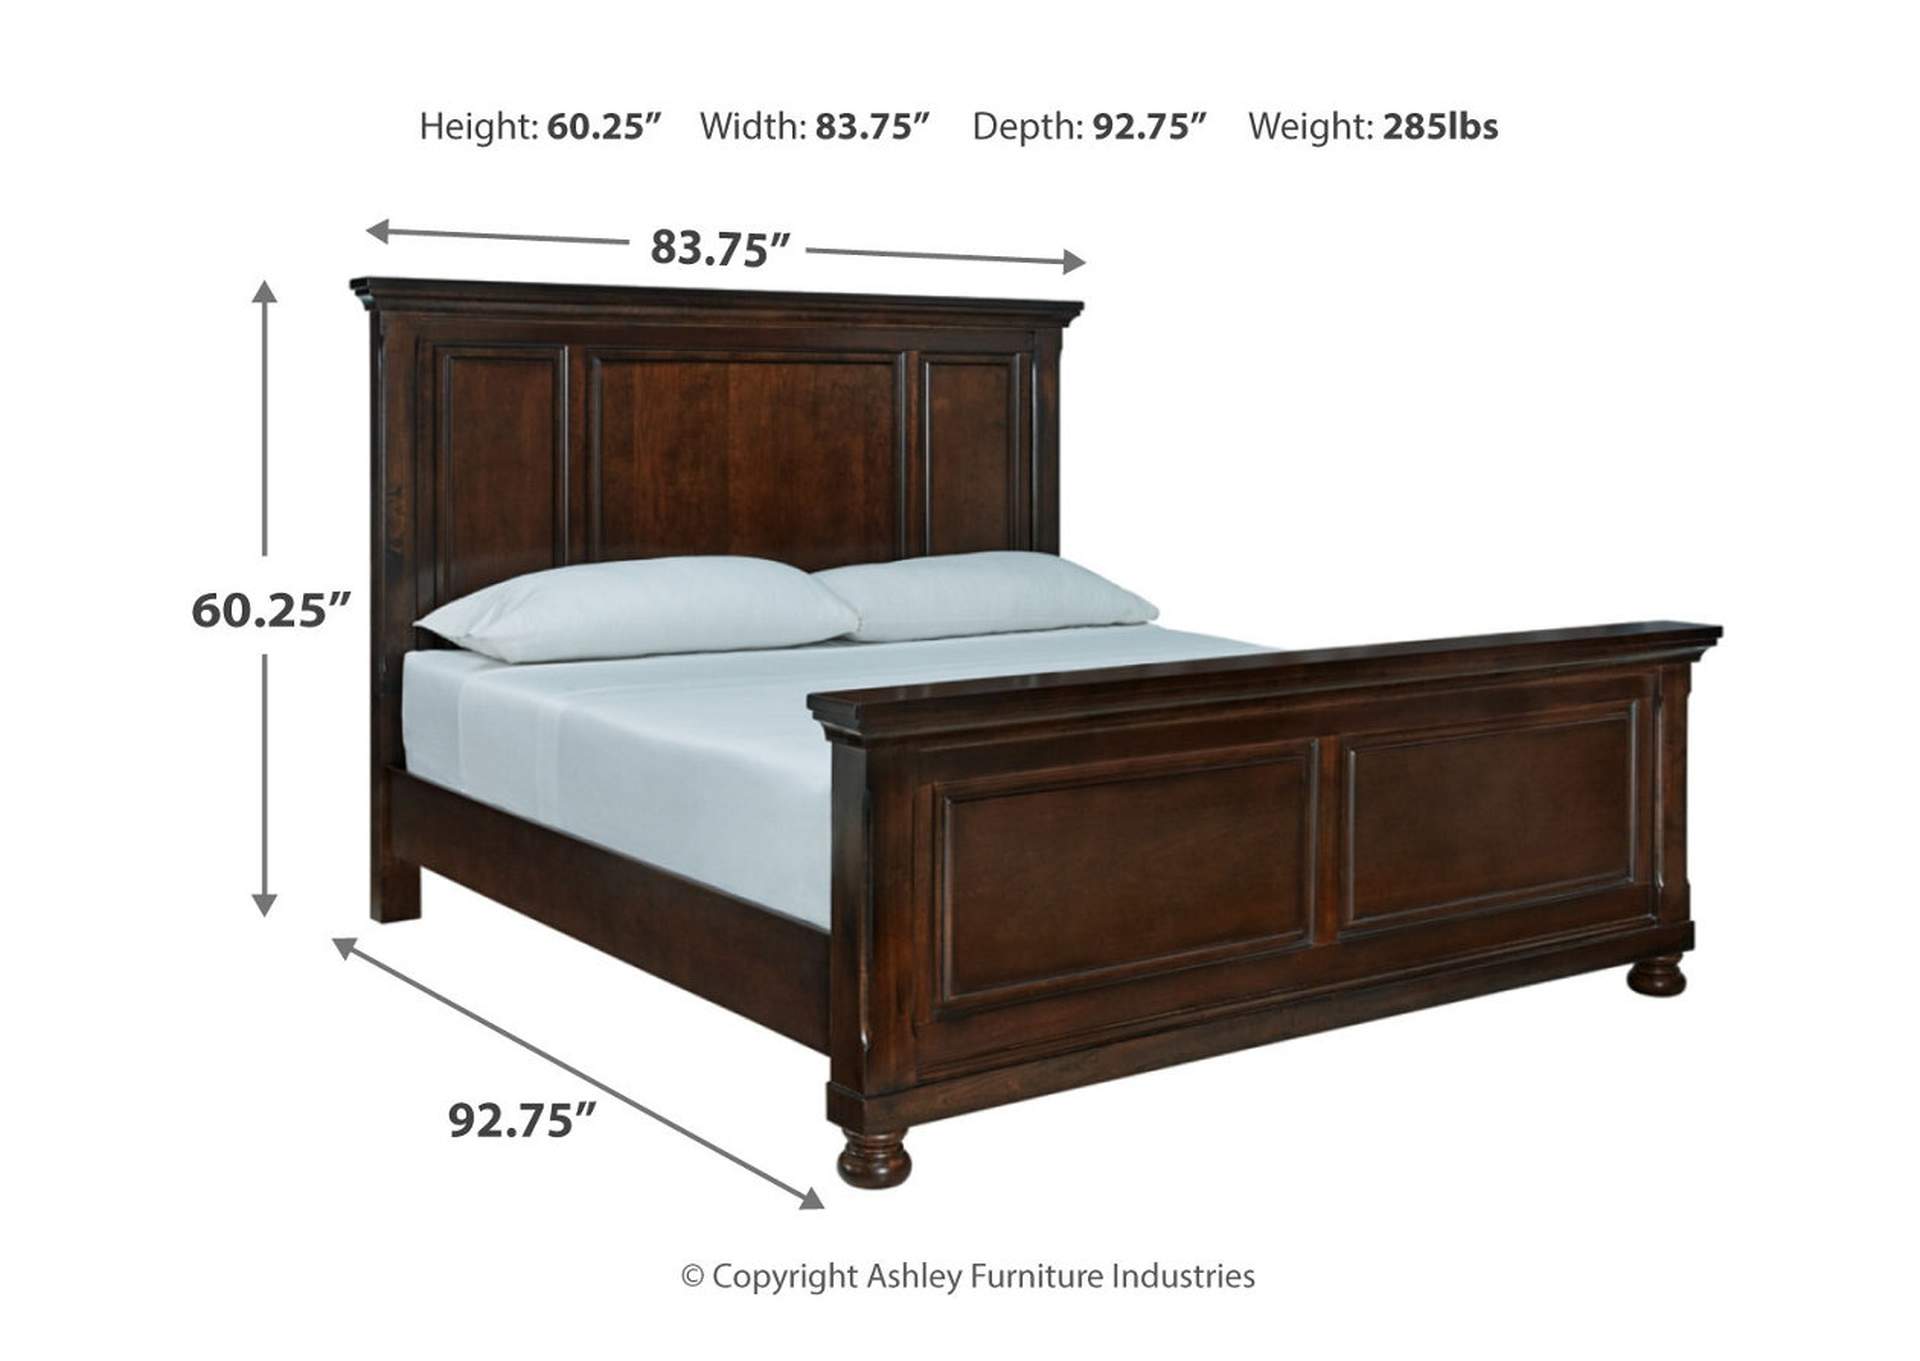 Porter California King Panel Bed with Dresser,Millennium